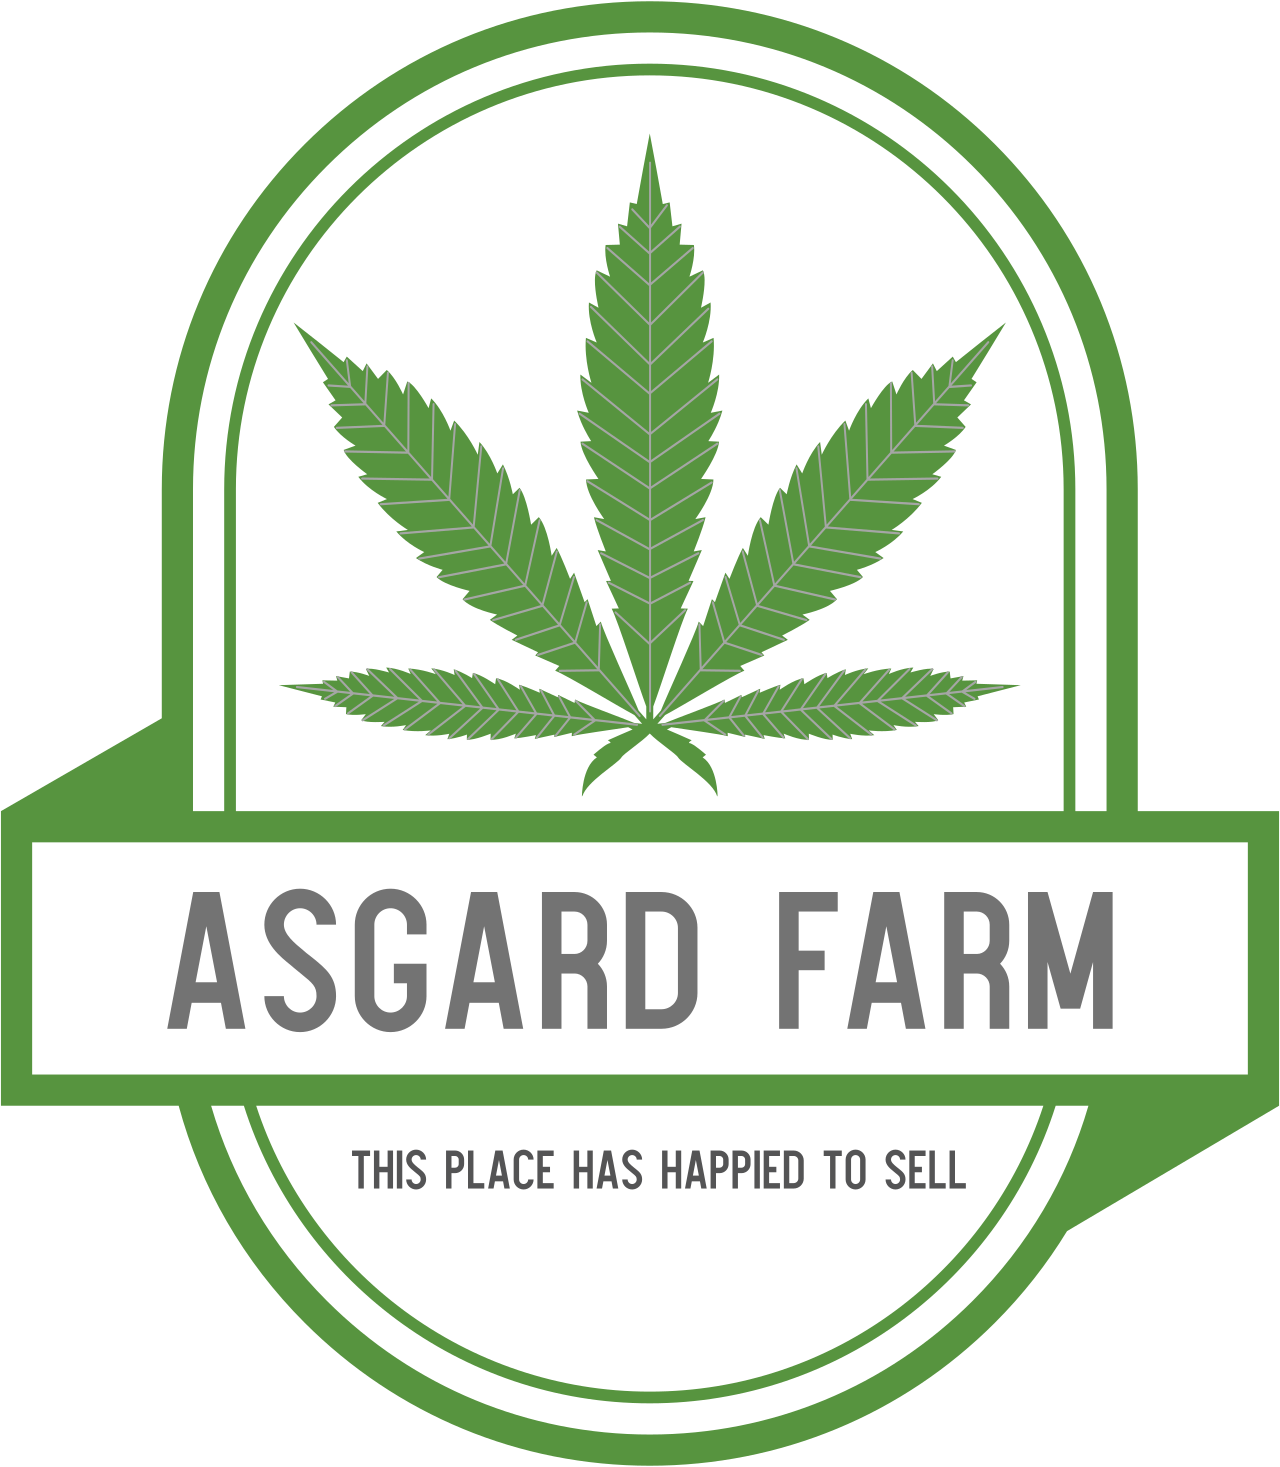 Asgard Farm 's web page